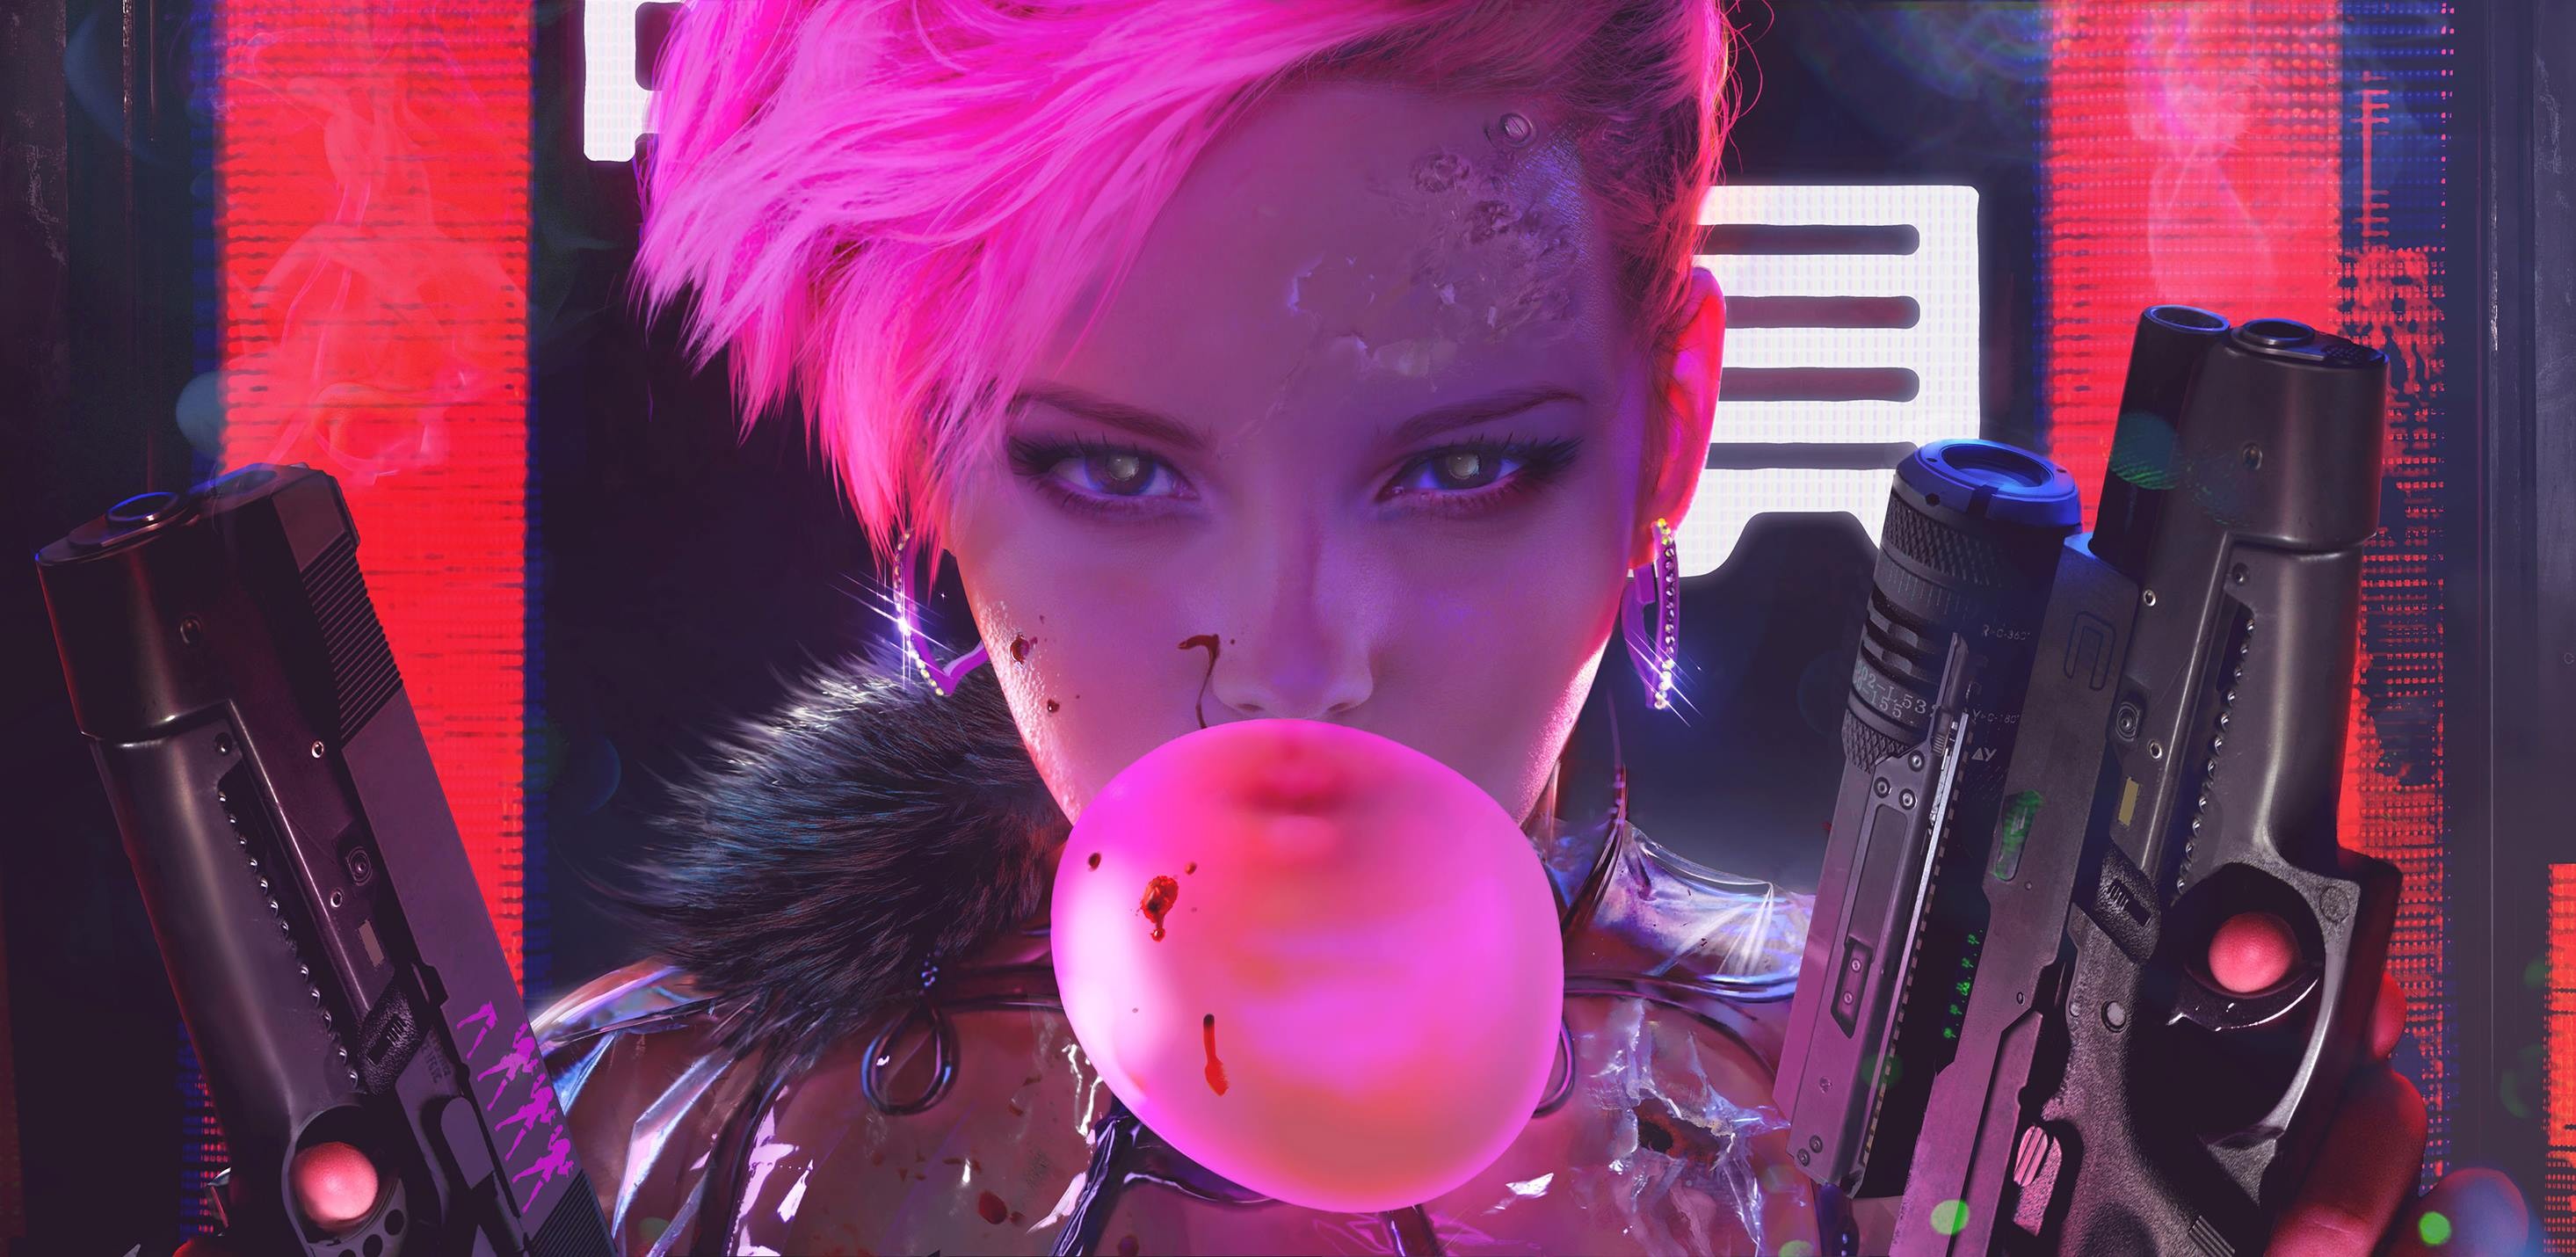 General 2931x1430 face fantasy art cyberpunk Maciej Kuciara women DeviantArt food sweets bubblegum blood weapon girls with guns pink hair looking at viewer